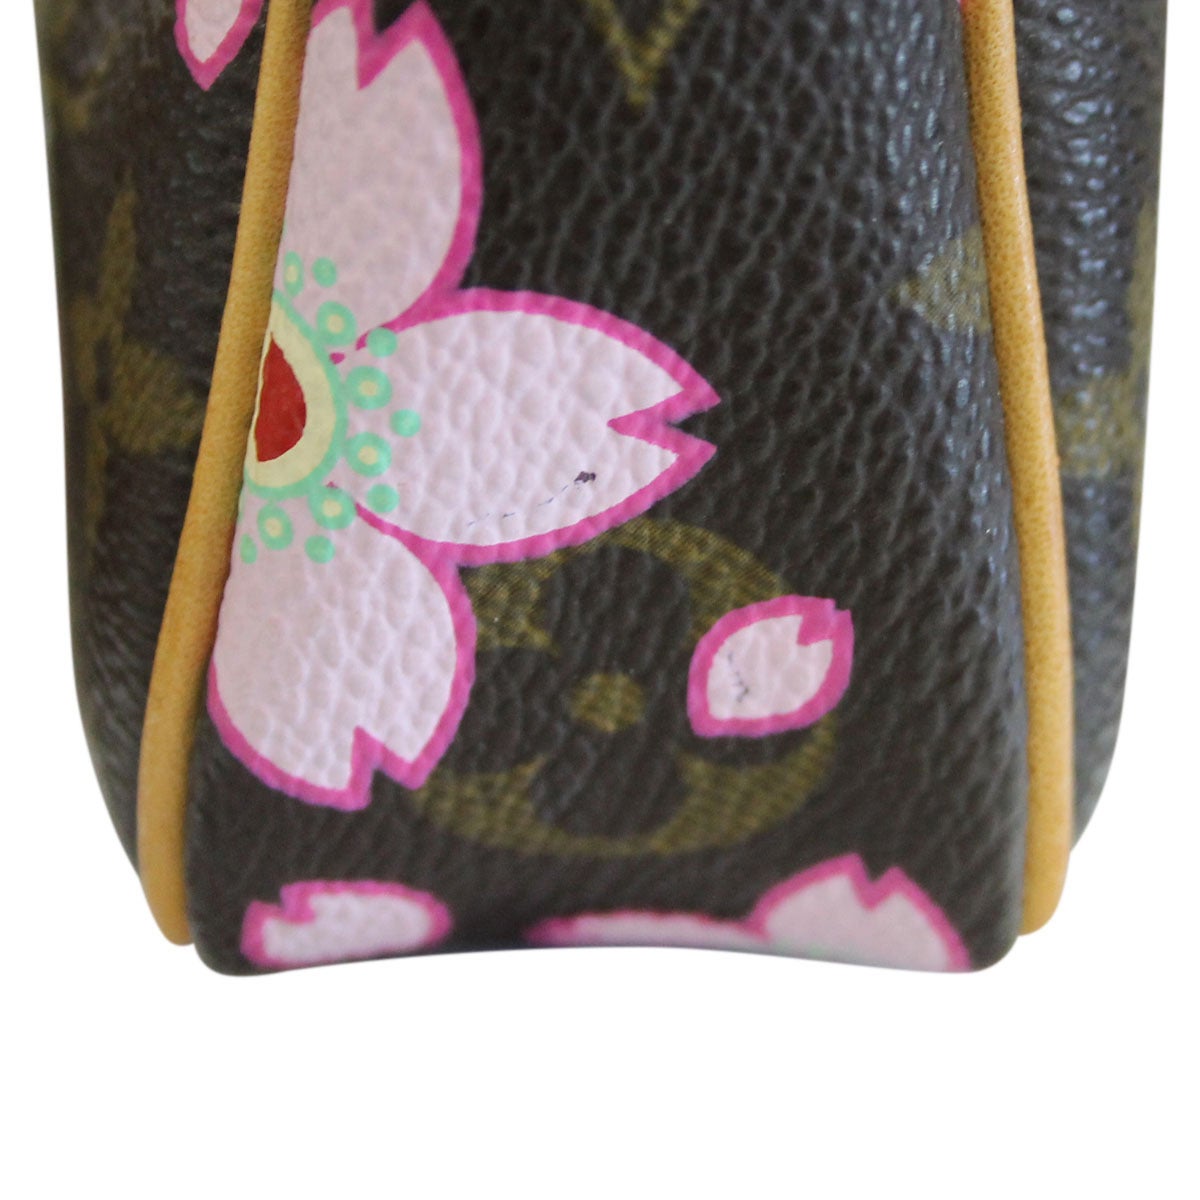 Louis Vuitton Cherry Blossom Pochette Monogram Bag Purse